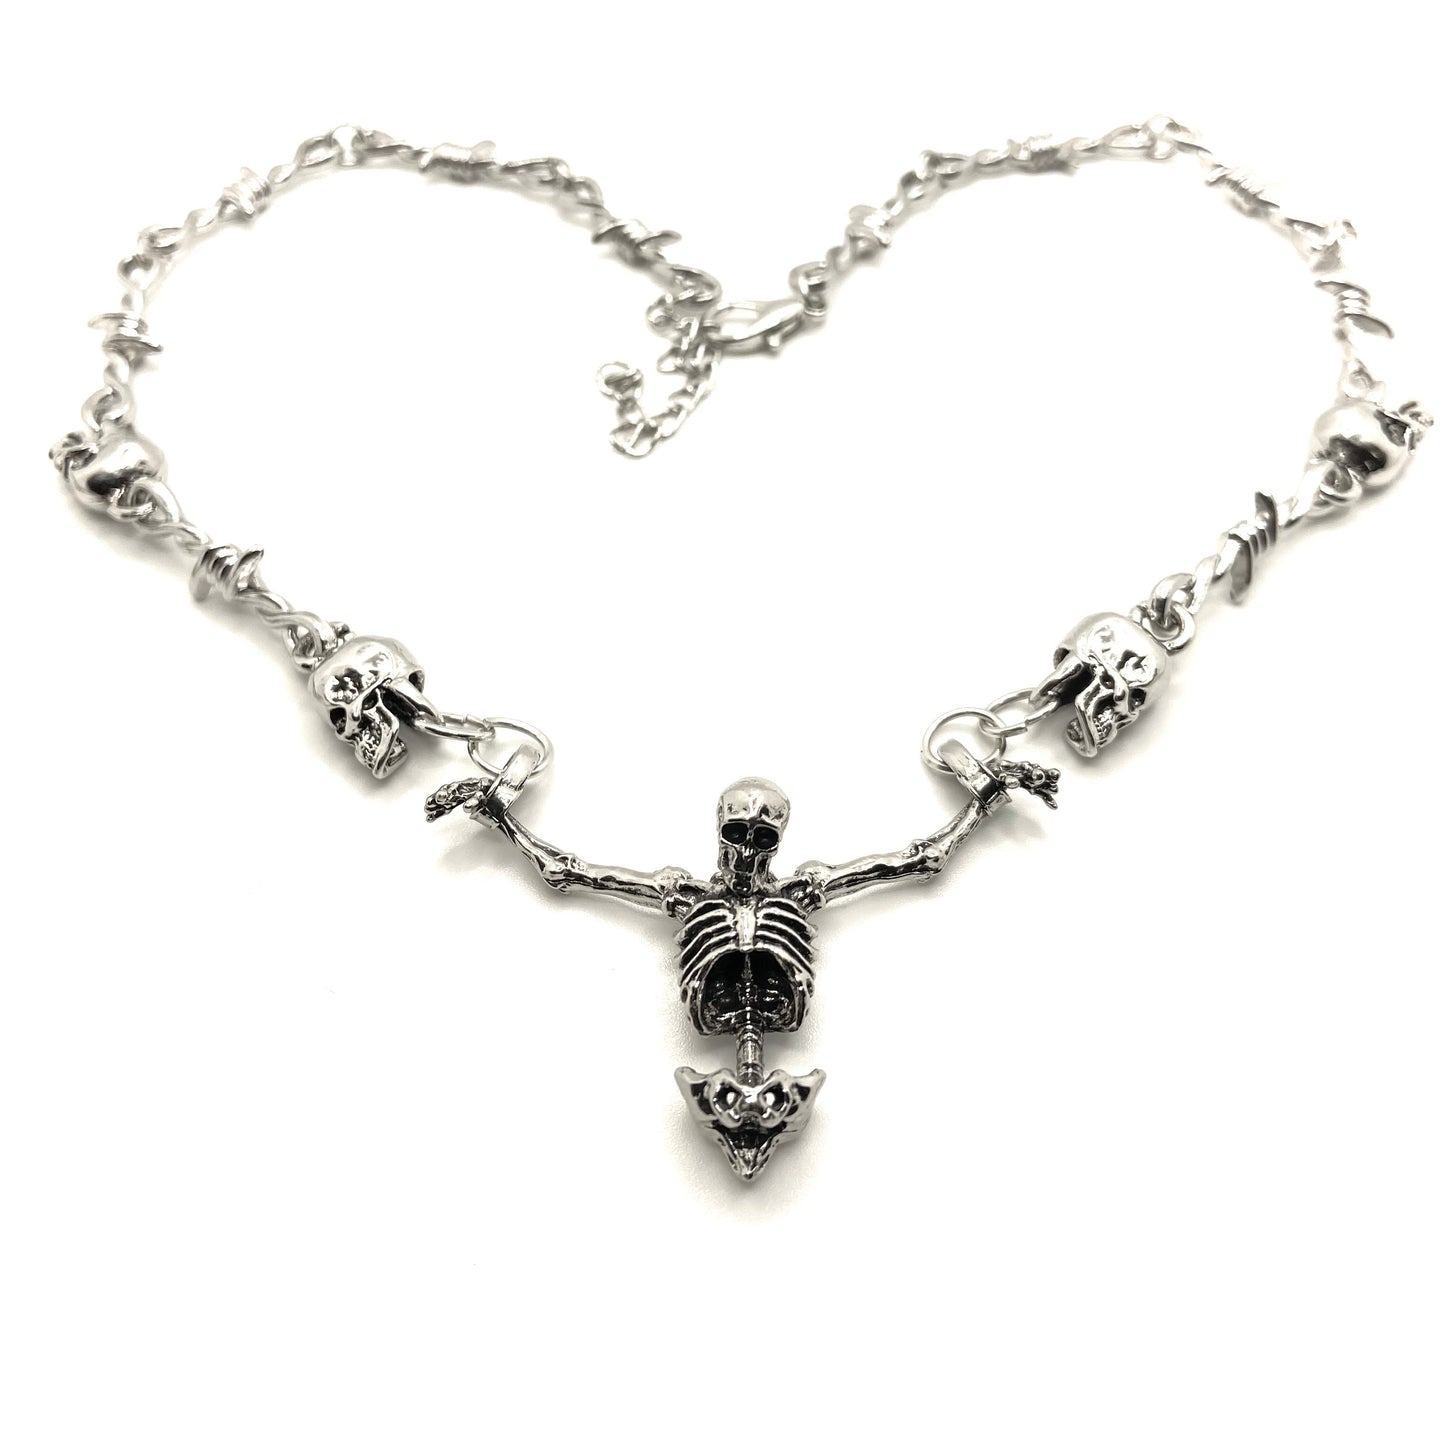 Kidemónas (Guardian) Necklace | Stainless Steel Skull Collar